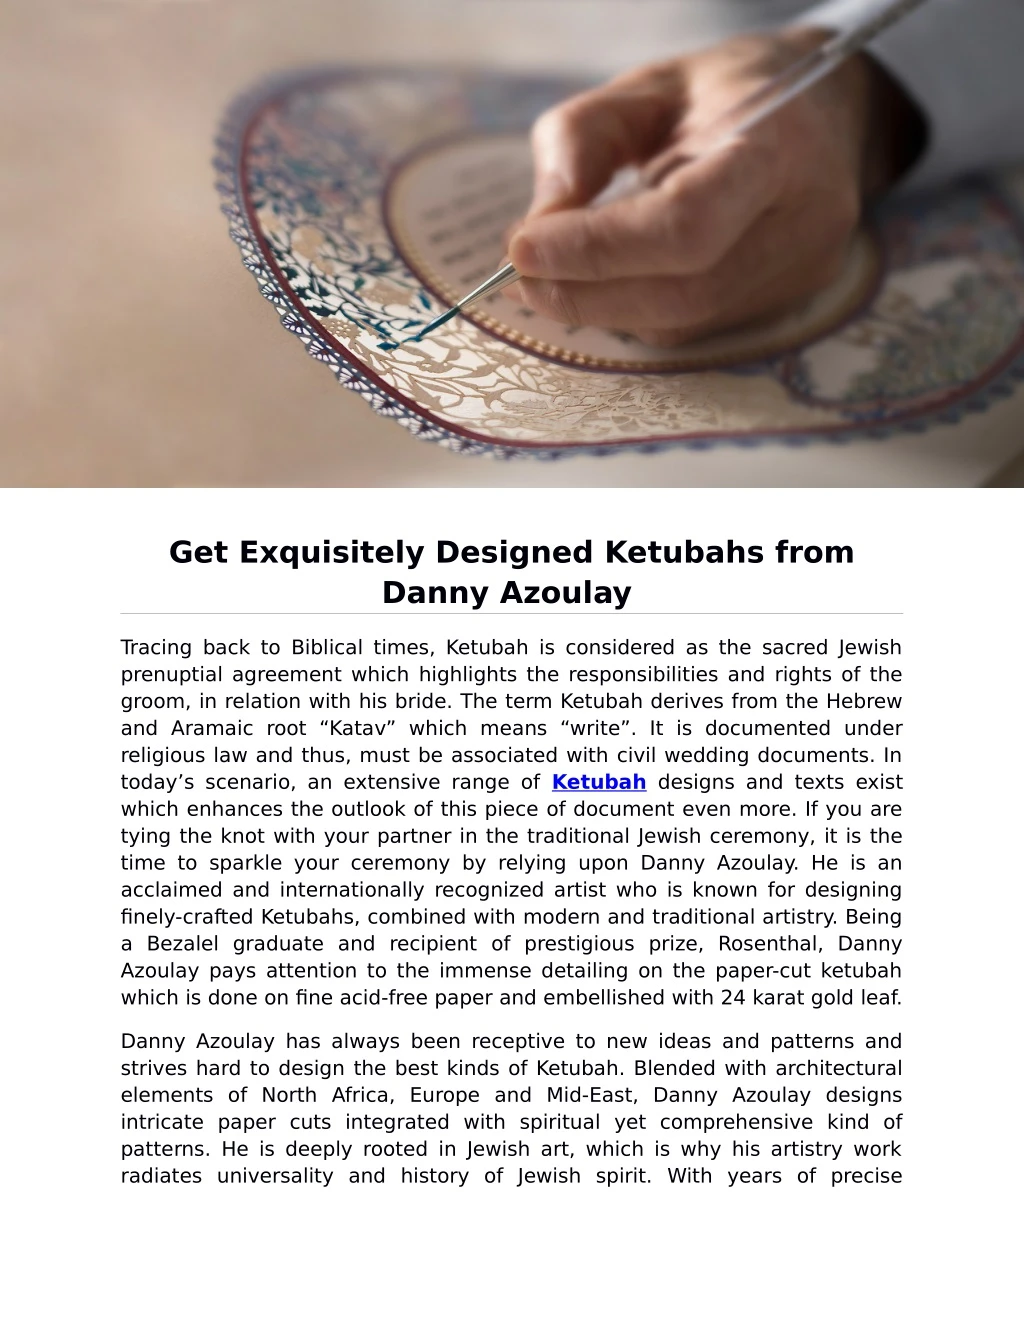 get exquisitely designed ketubahs from danny